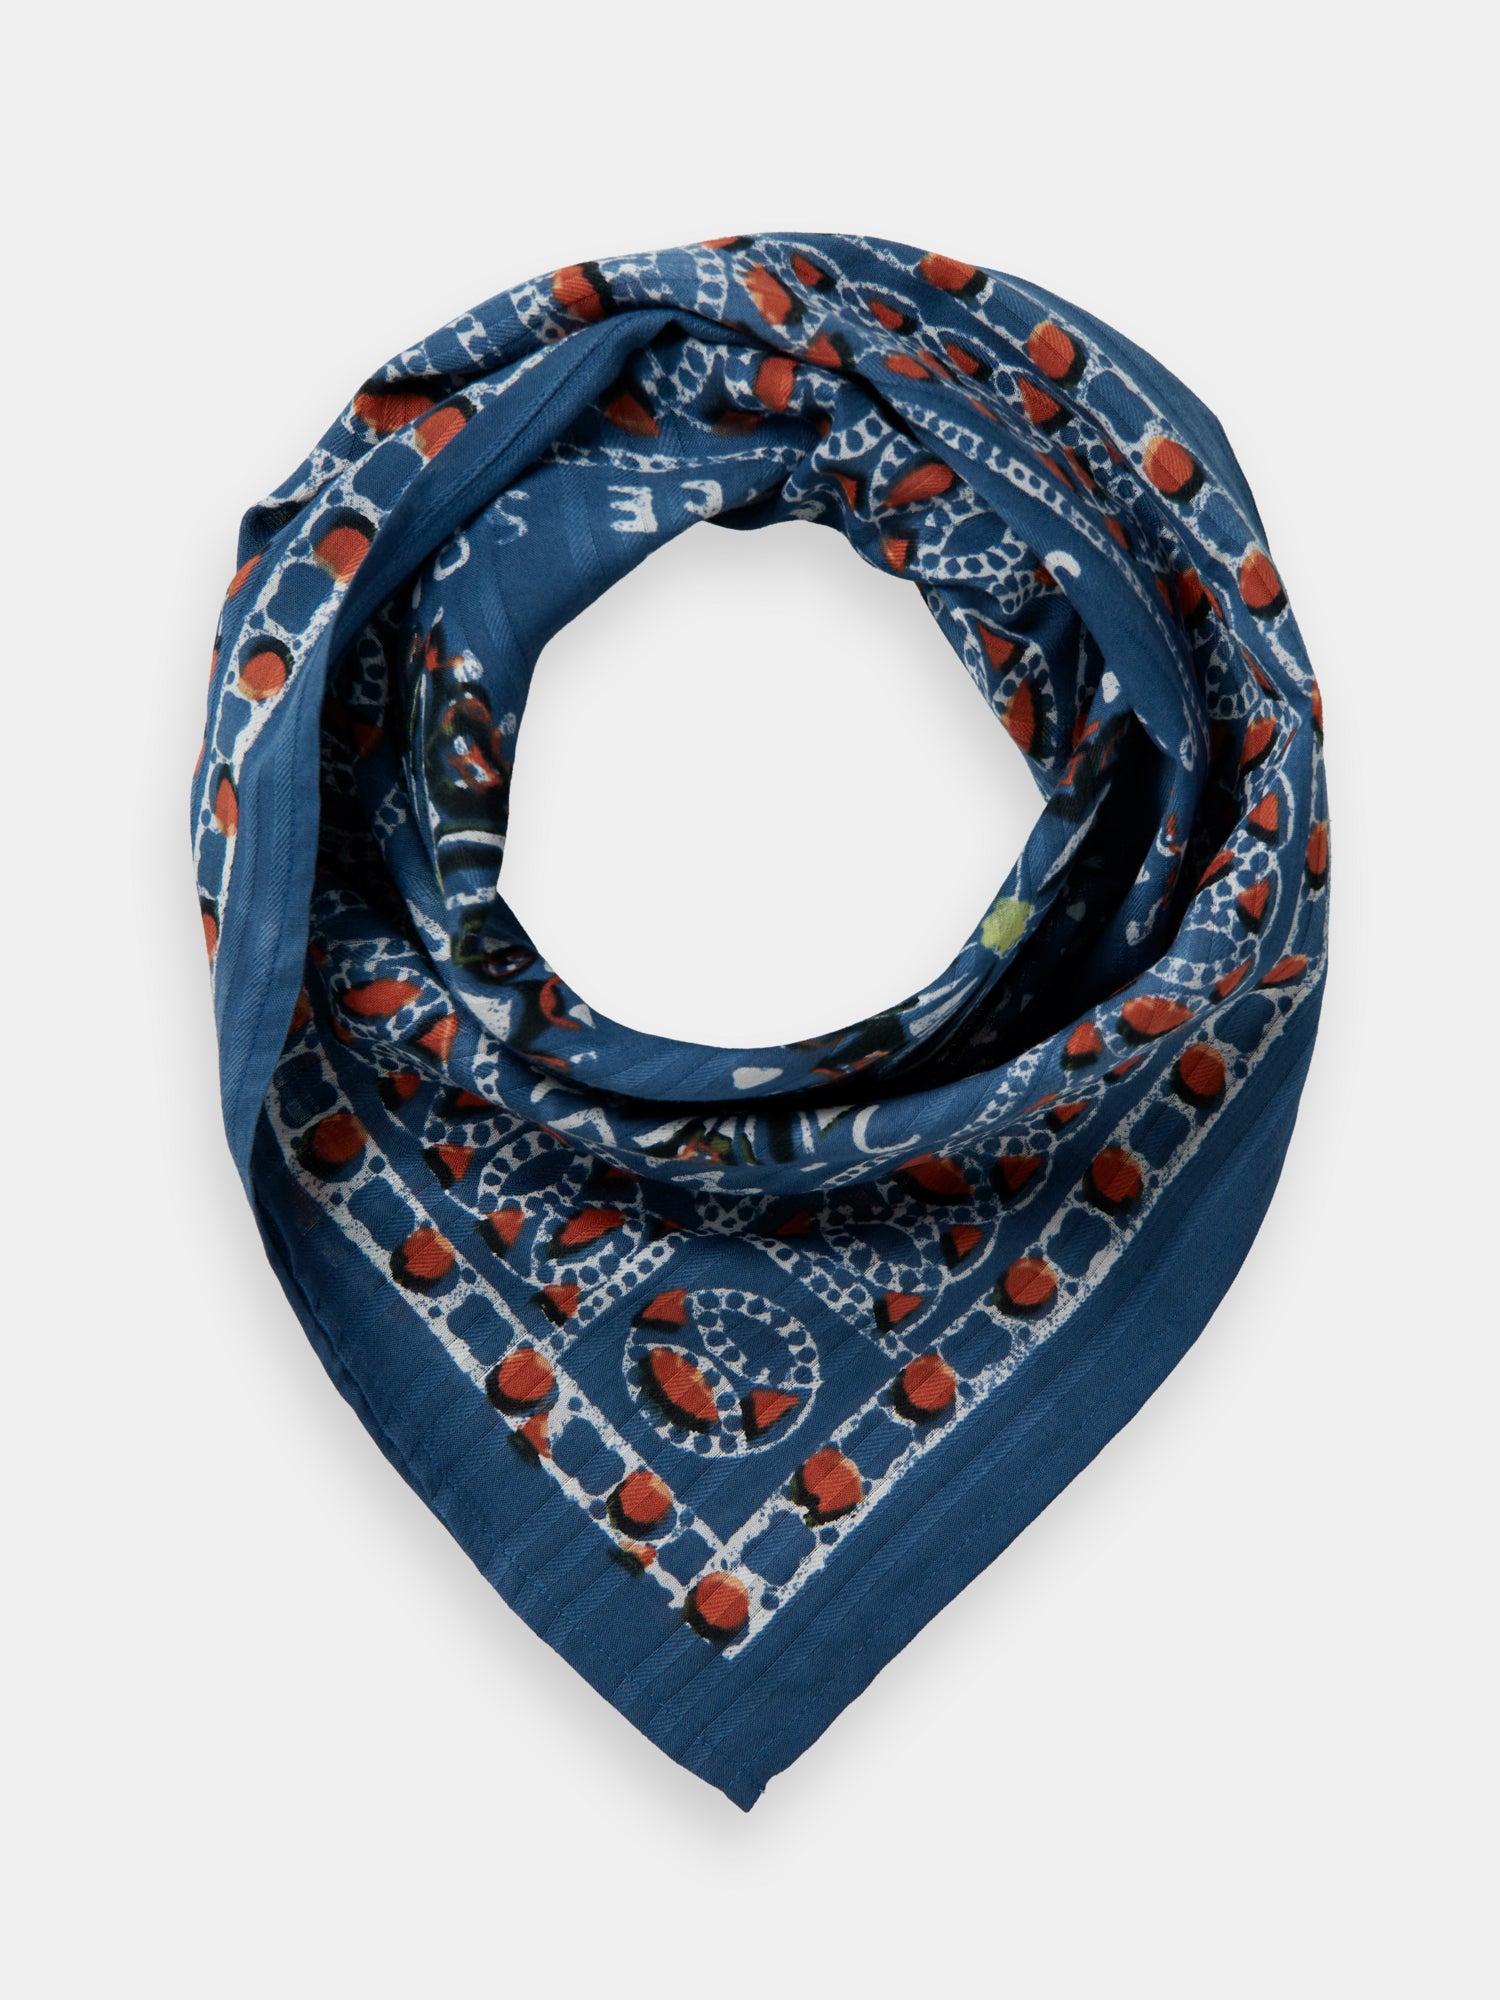 Printed bandana scarf - B sides bandana marine